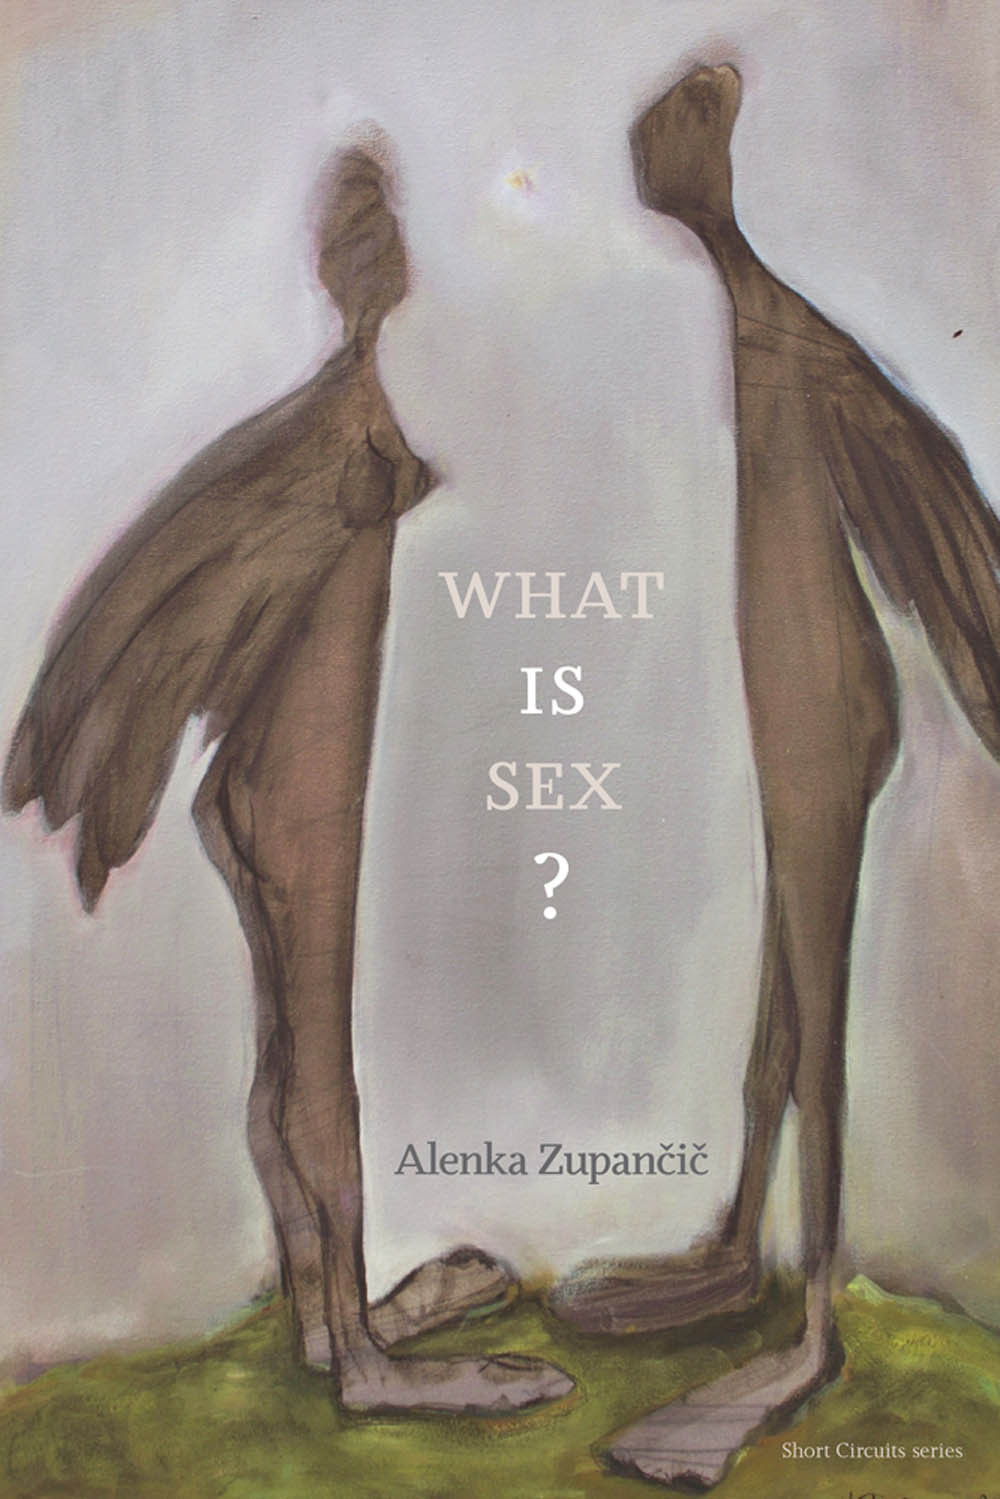 Alenka Zupančič. What IS sex? The MIT Press, 2017